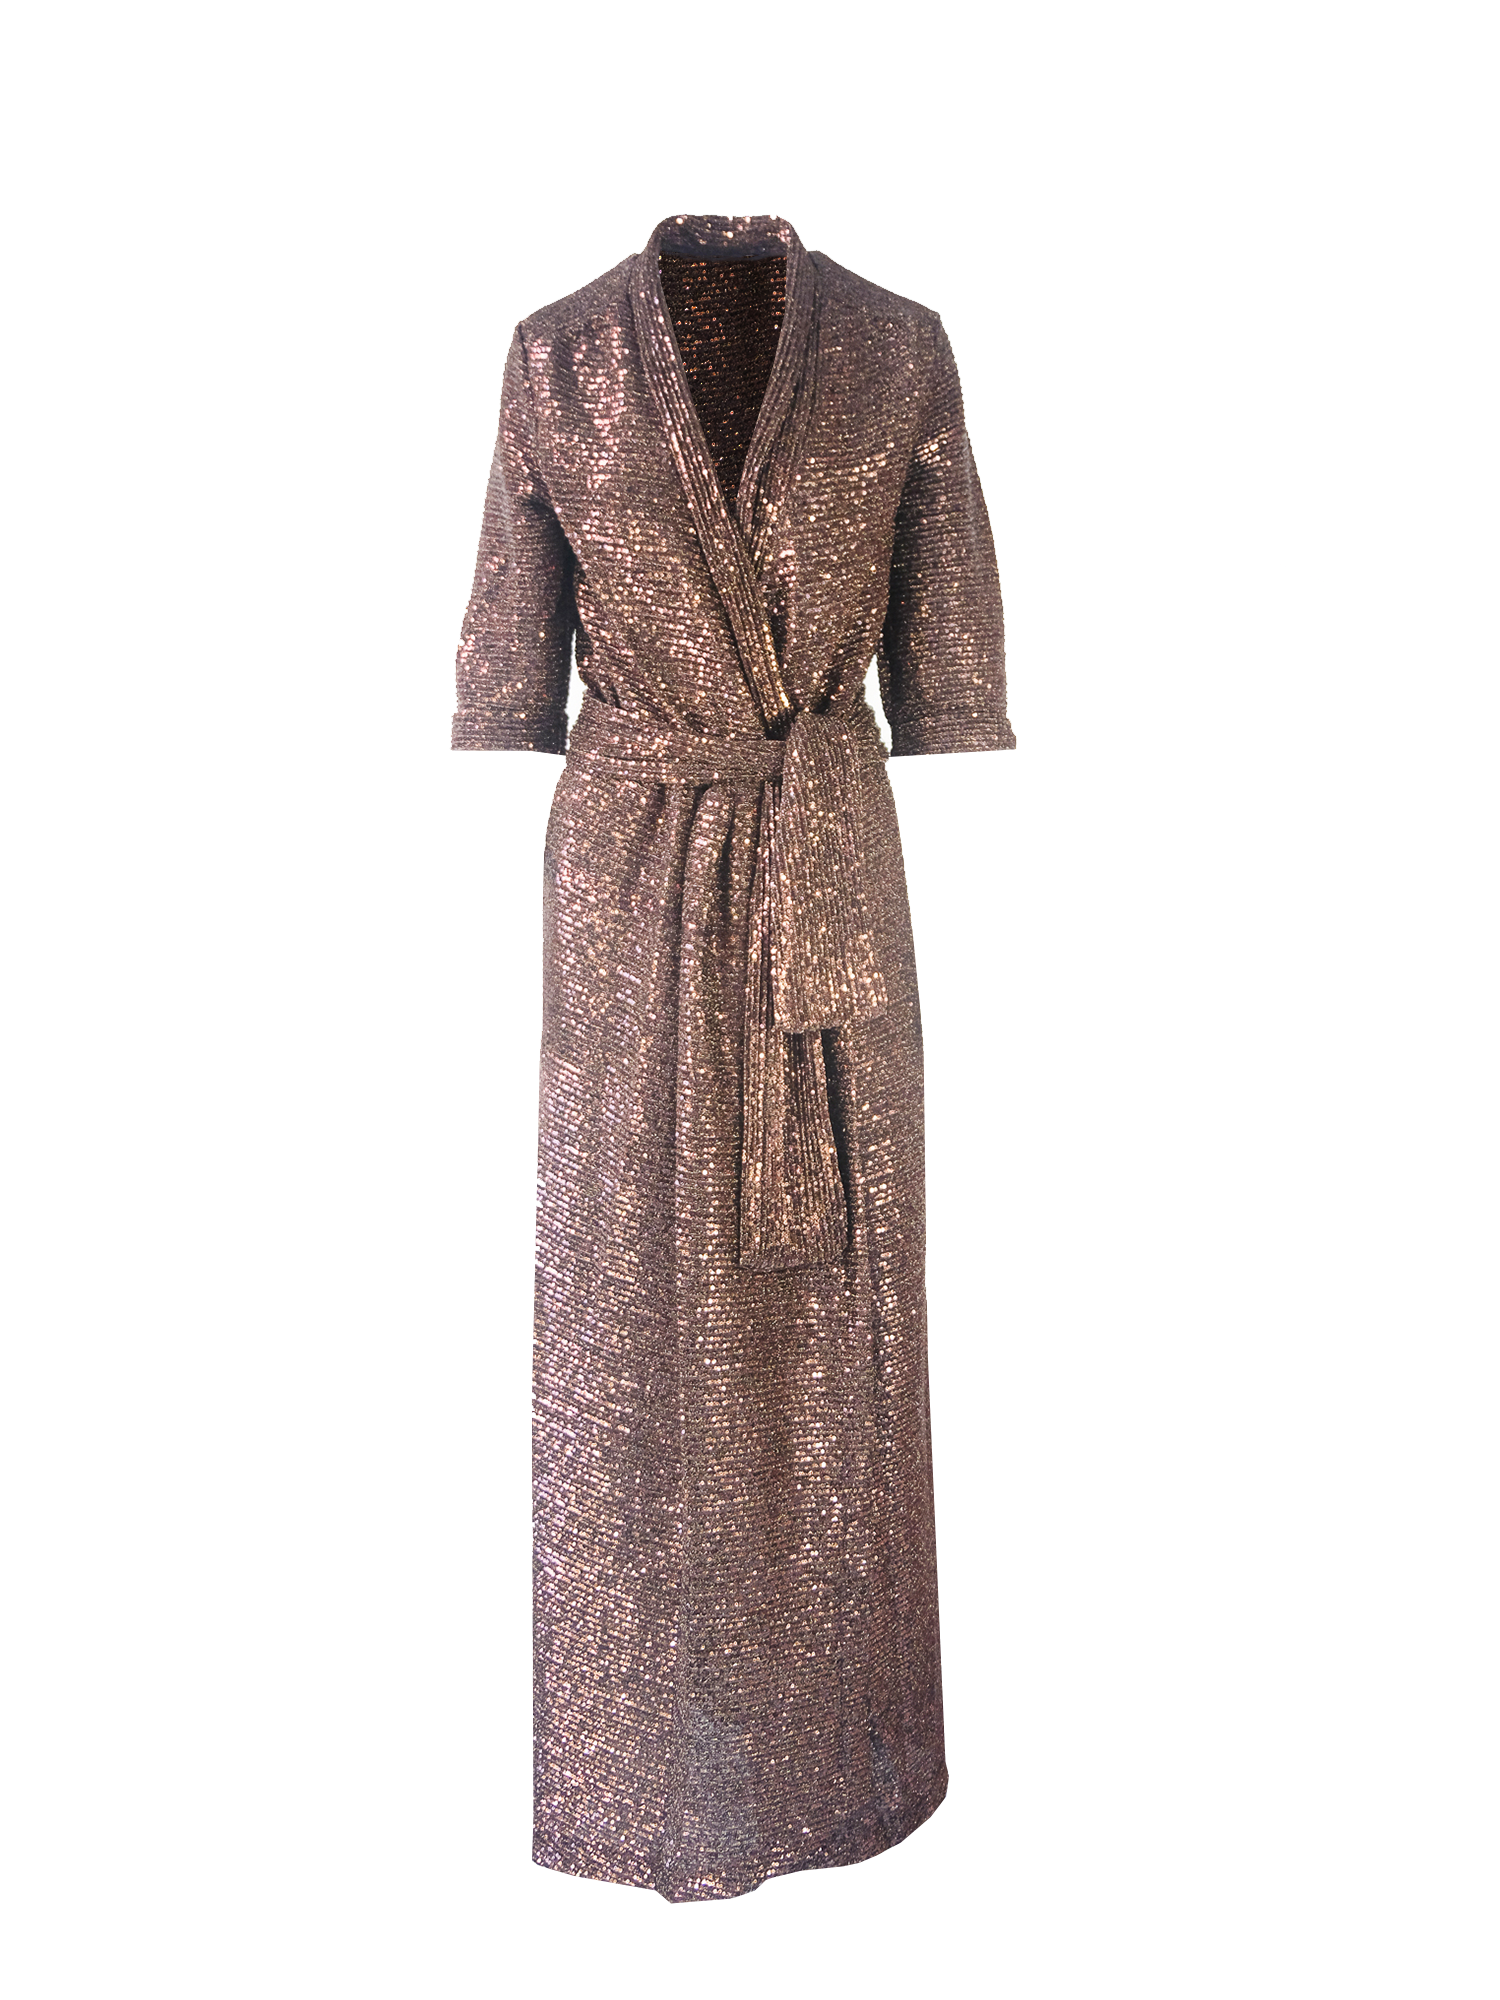 GINEVRA - long brown sequin dress